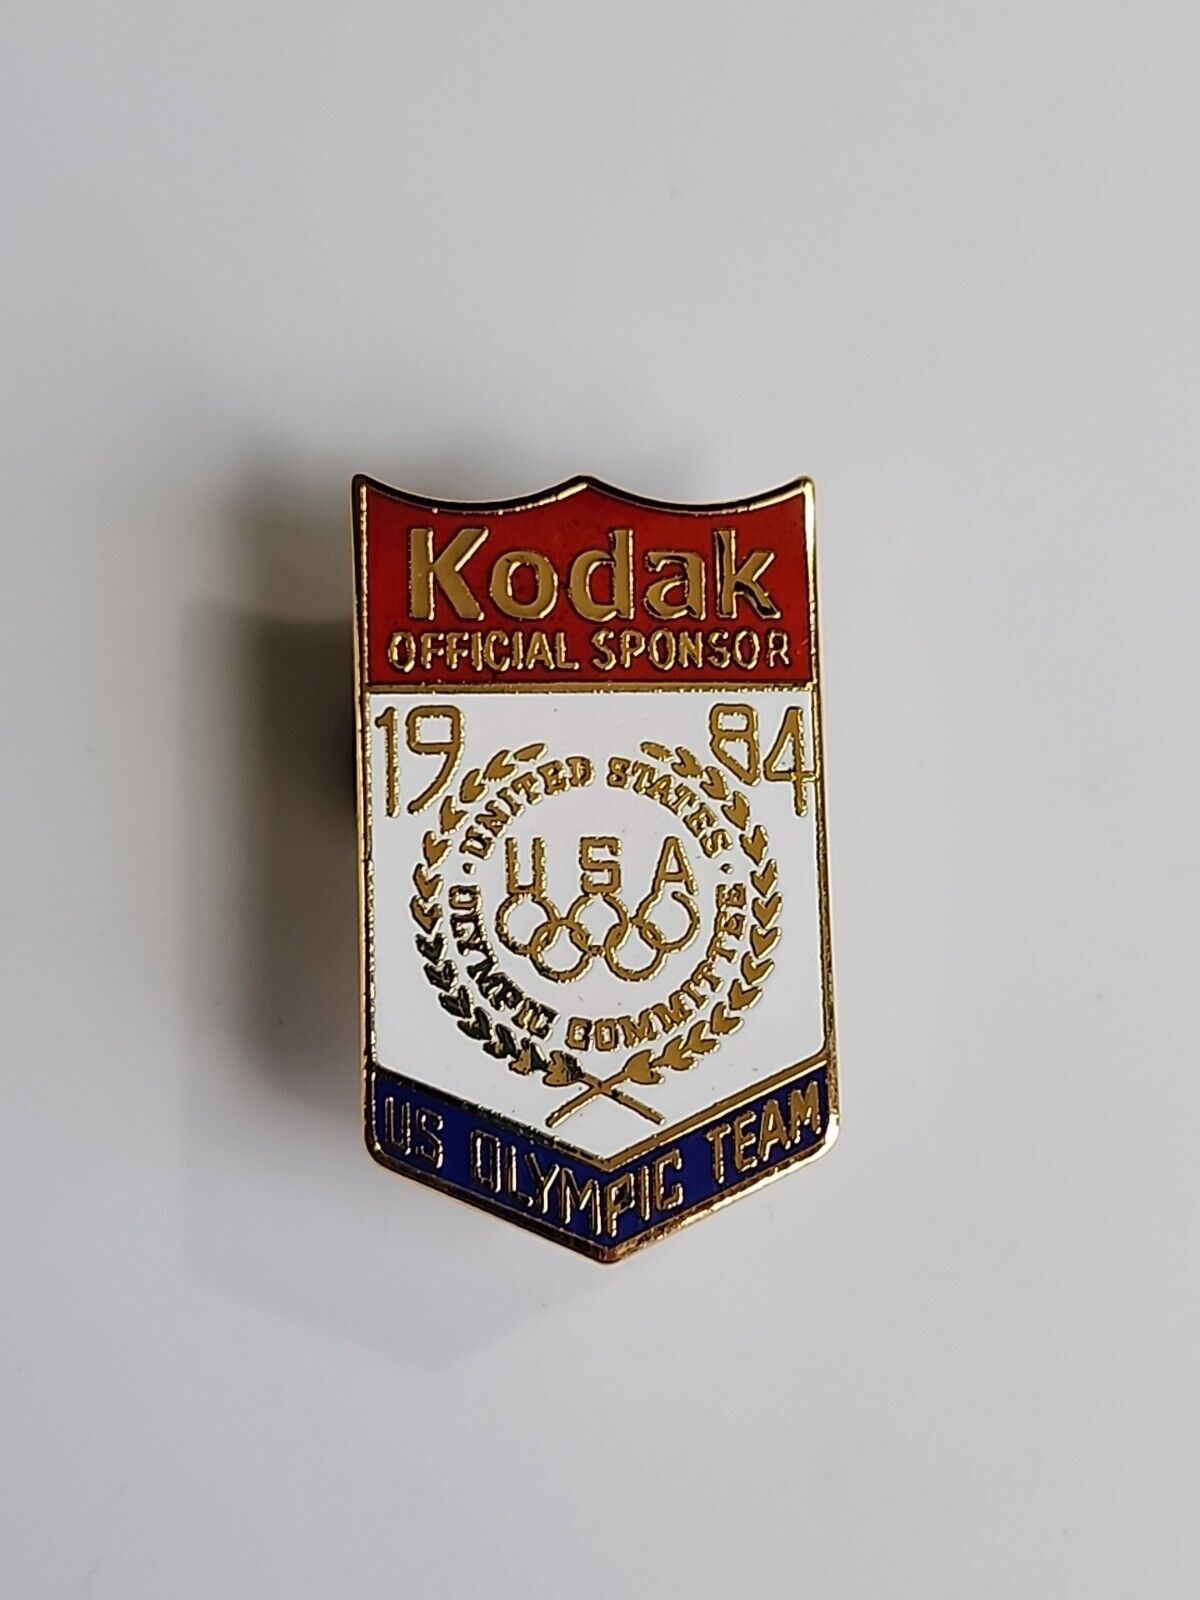 Kodak Official Sponsor 1984 USA Olympic Team Badge Lapel Pin Olympic Committee